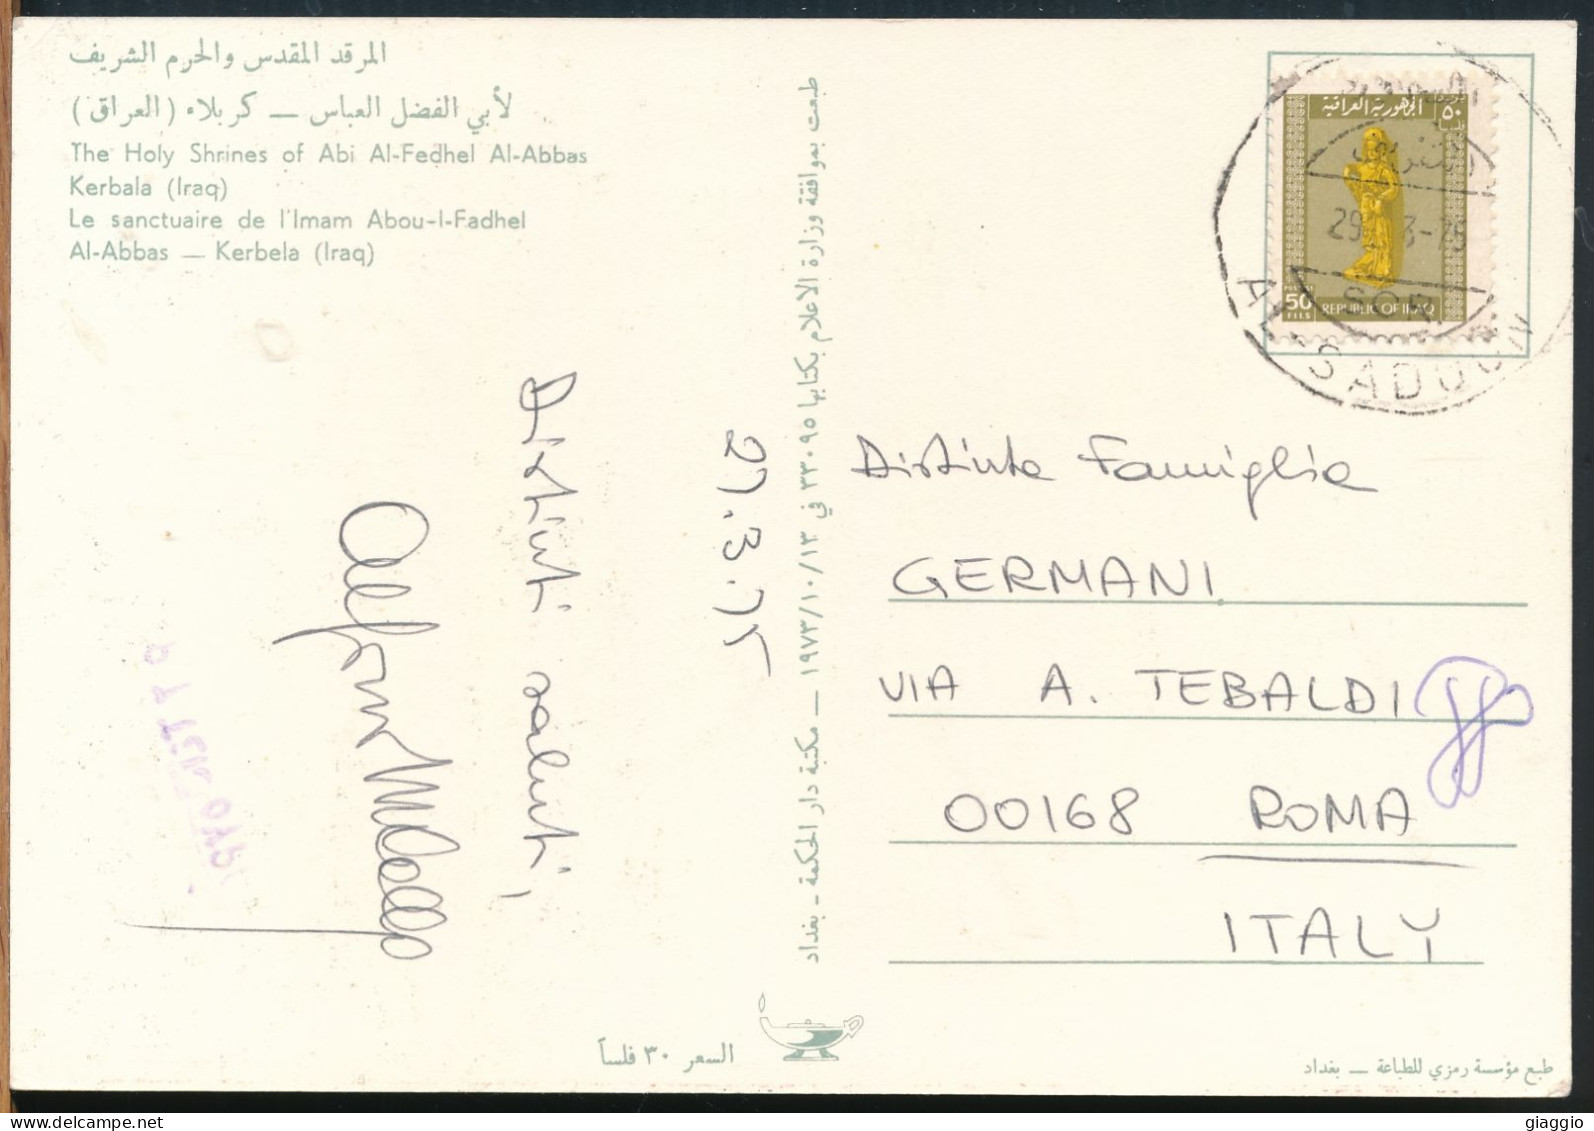 °°° 31097 - IRAQ - KERBELA - THE HOLY SHRINES OF ABI AL-FEDHEL AL-ABBAS - 1975 With Stamps °°° - Iraq